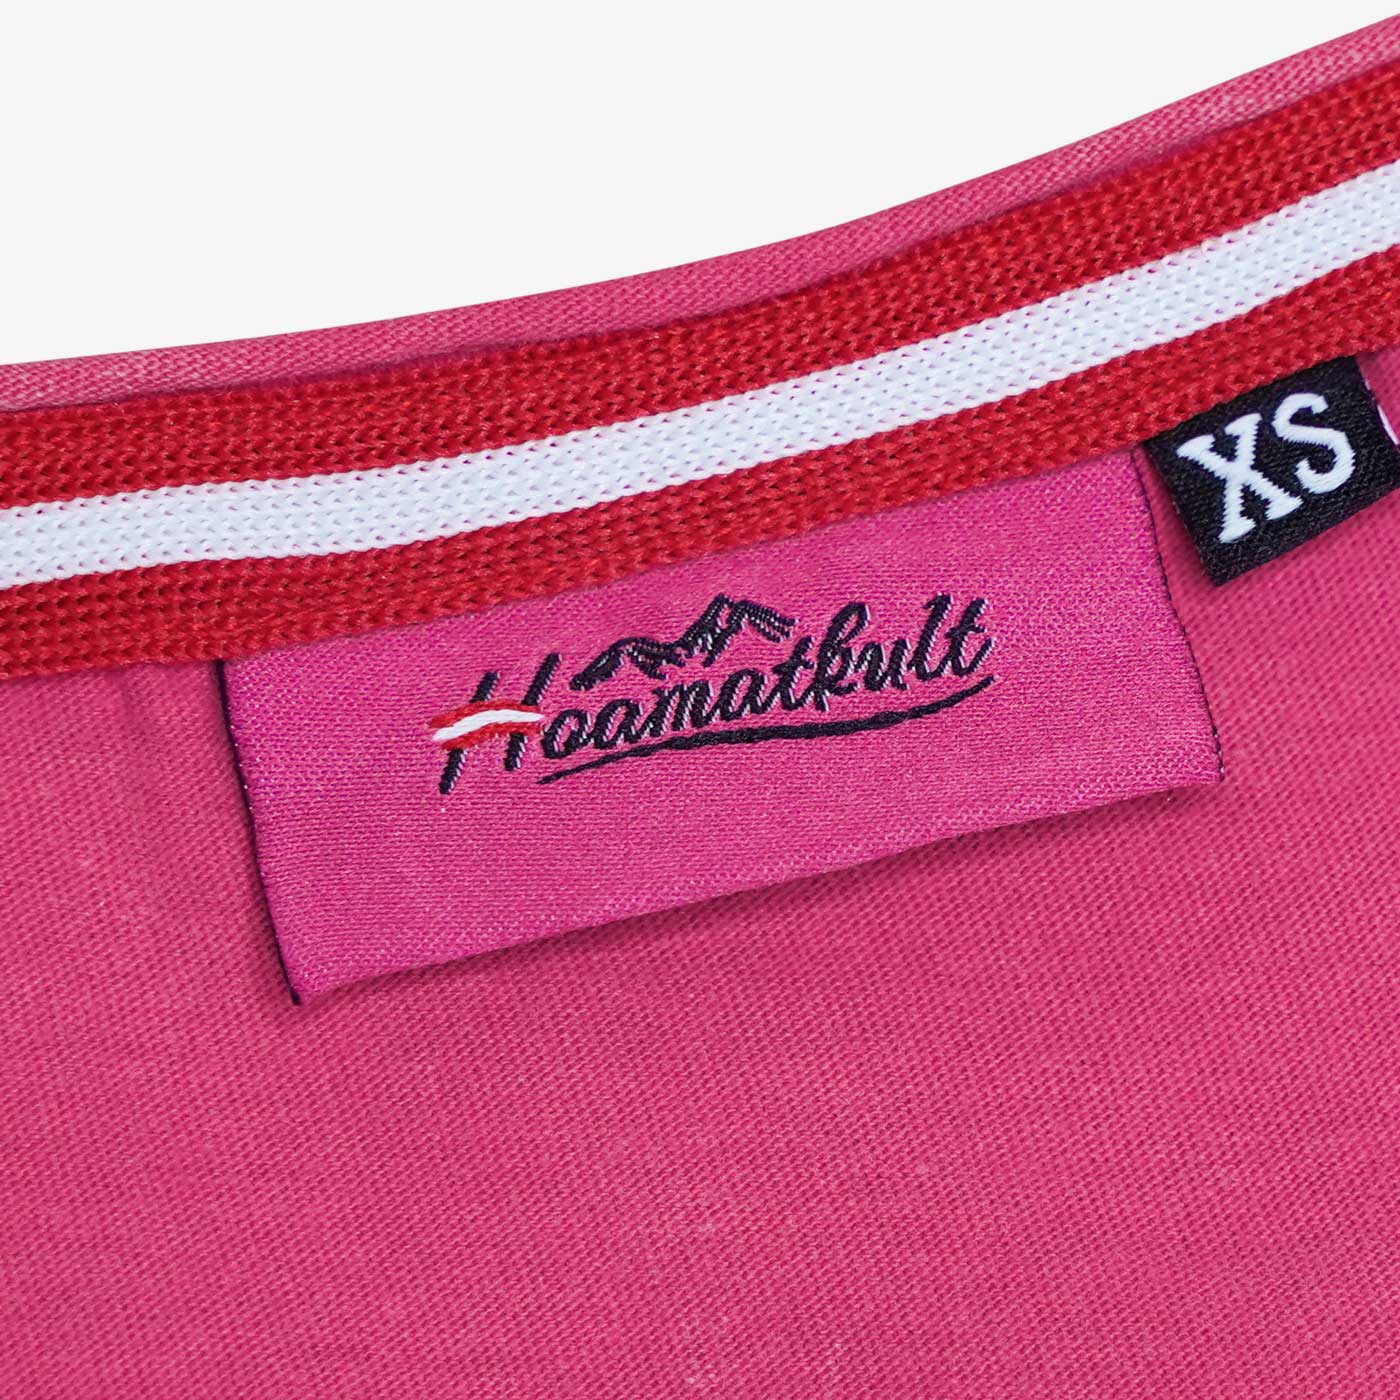 Hoamatkult Label pink